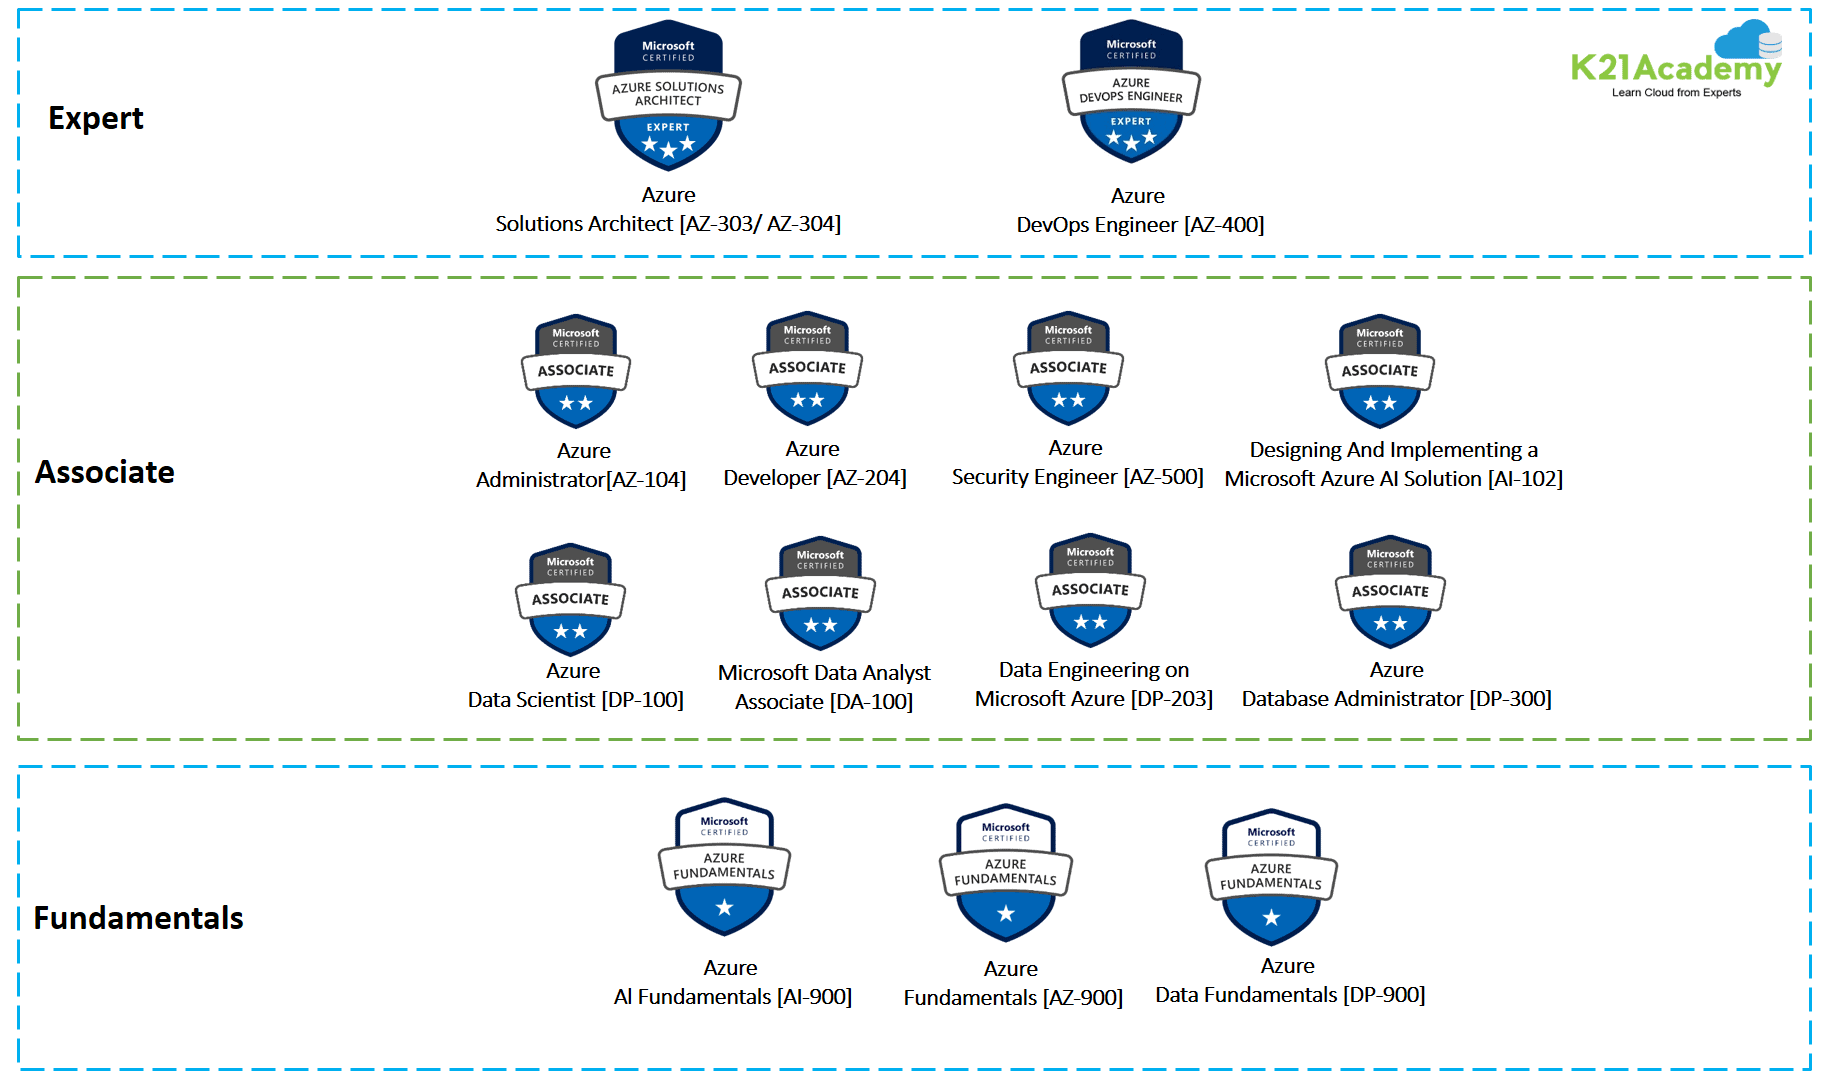 Azure all certifications: Azure certifications